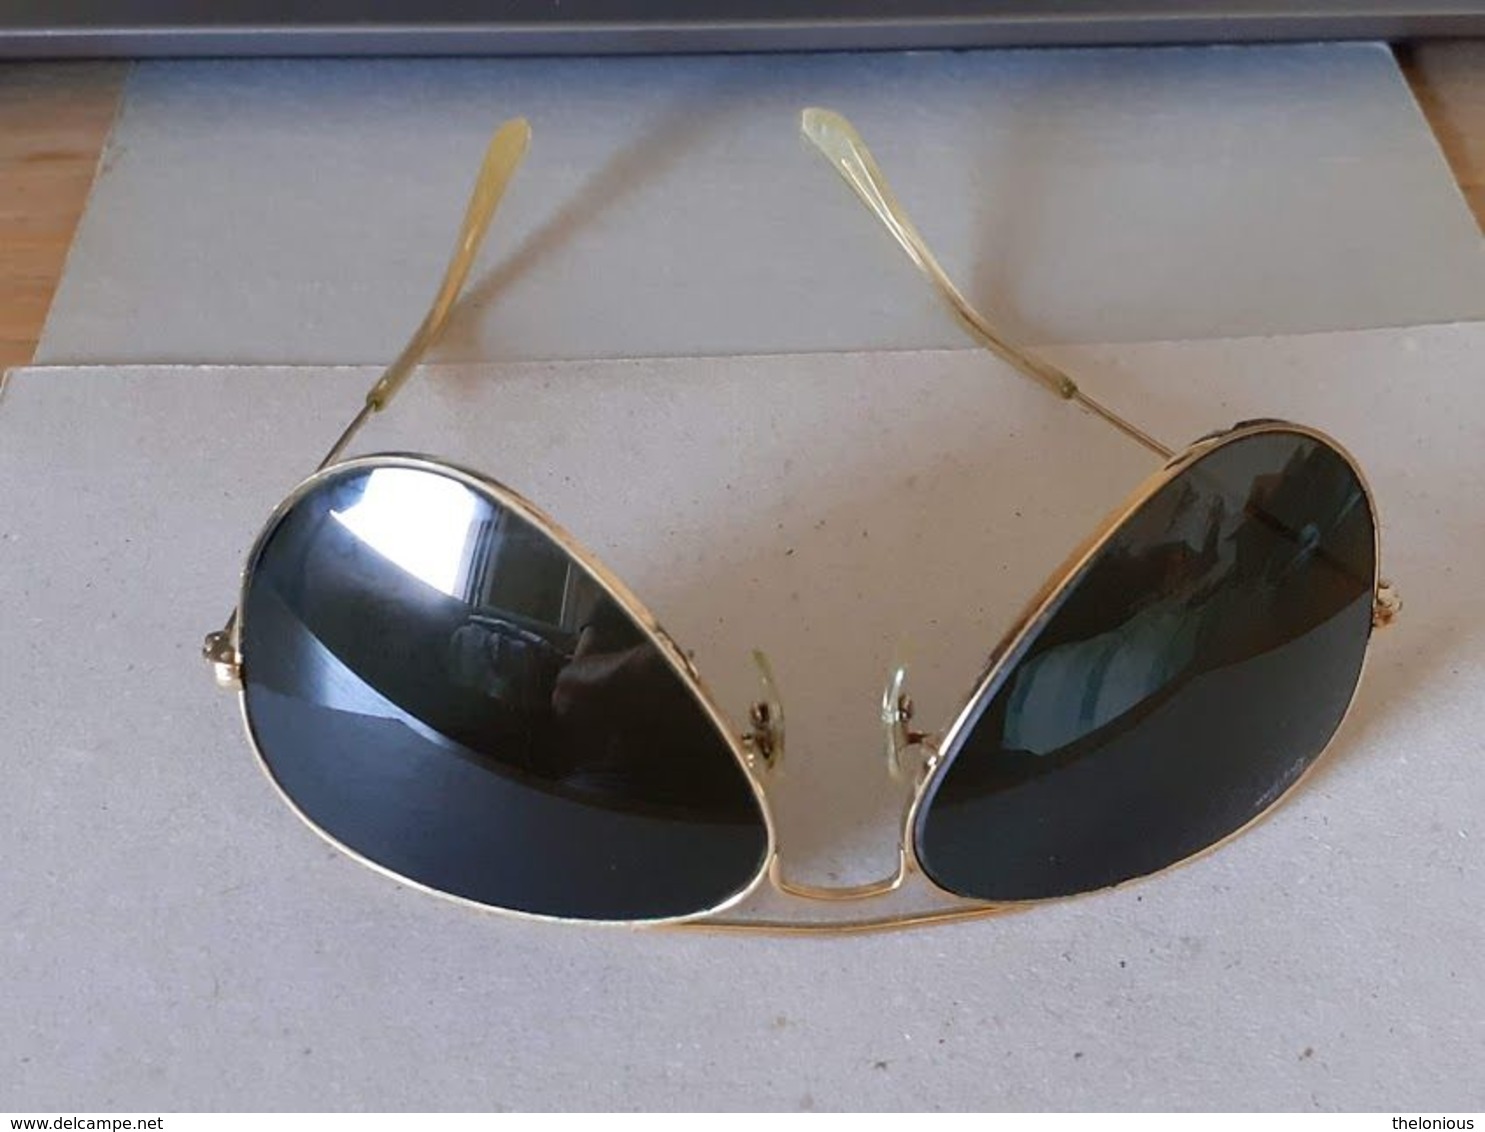 # Vintage occhiali Ray-Ban originali BAUSCH & LOMB - NEW YORK USA primi anni '90